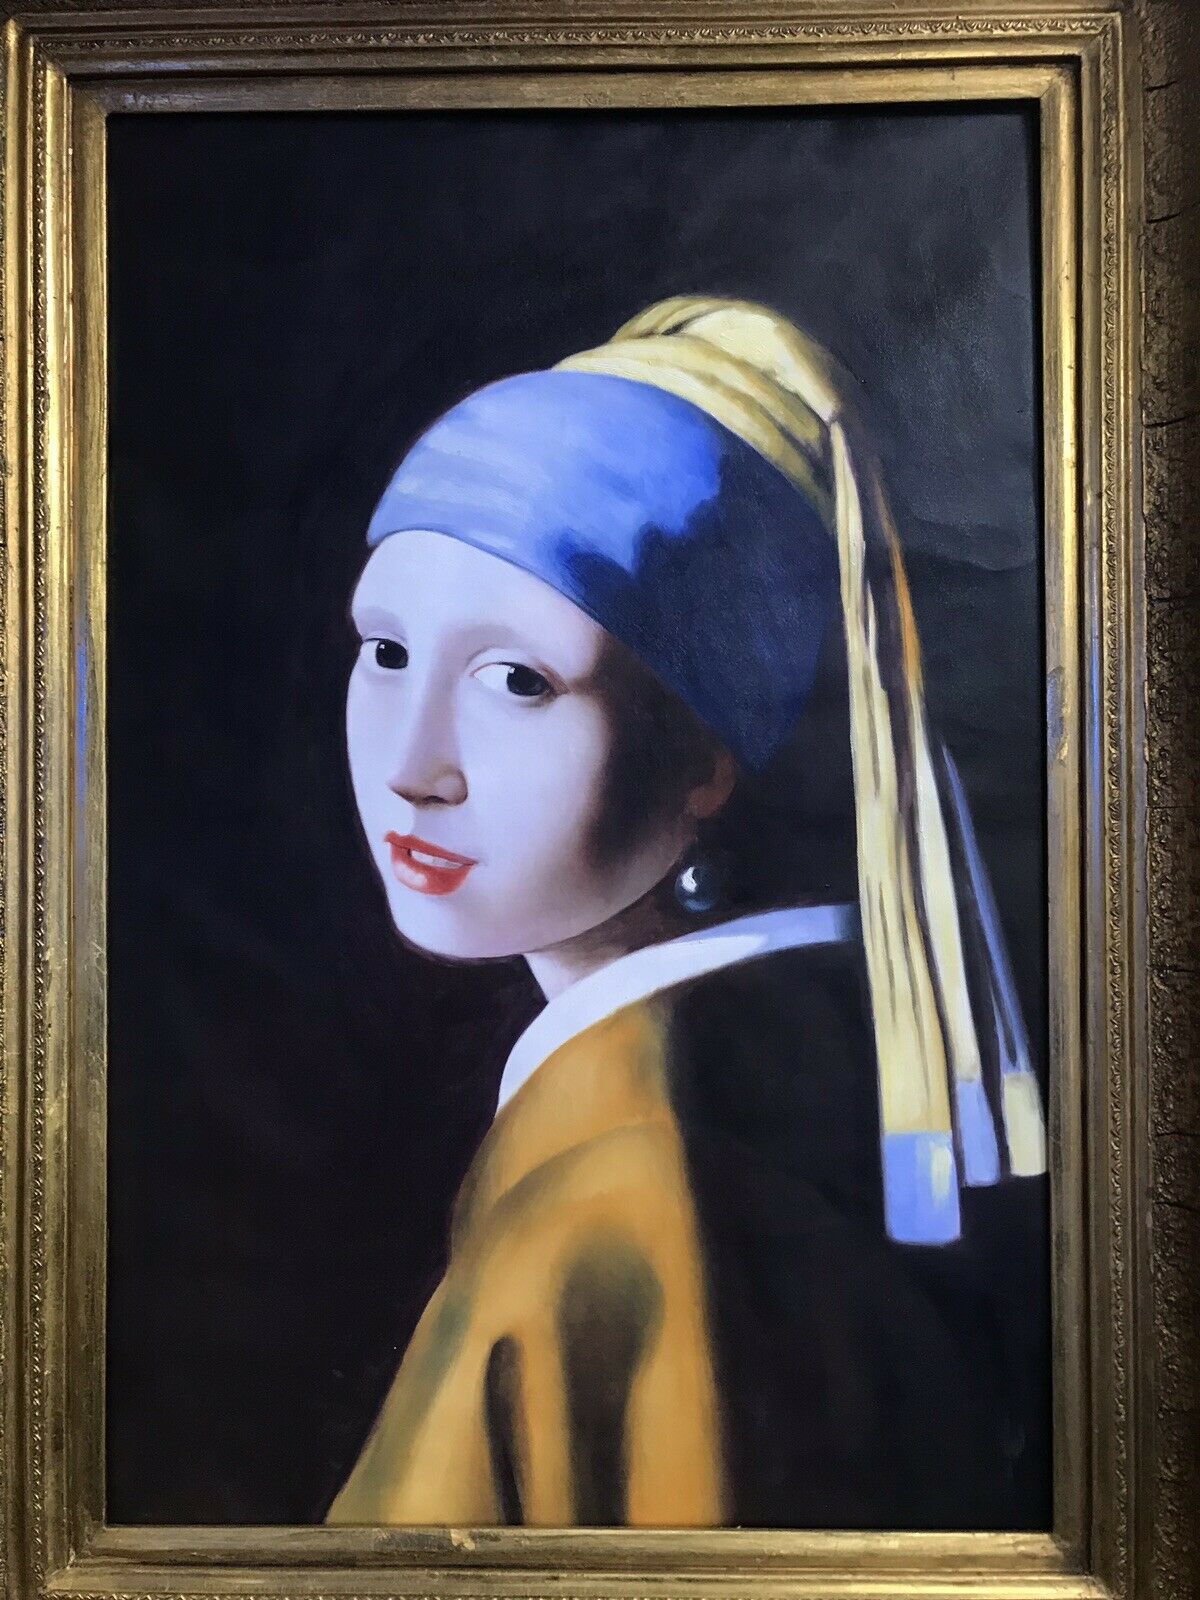 Grand Oil Painting After Vermeer Set In Gilt Frame